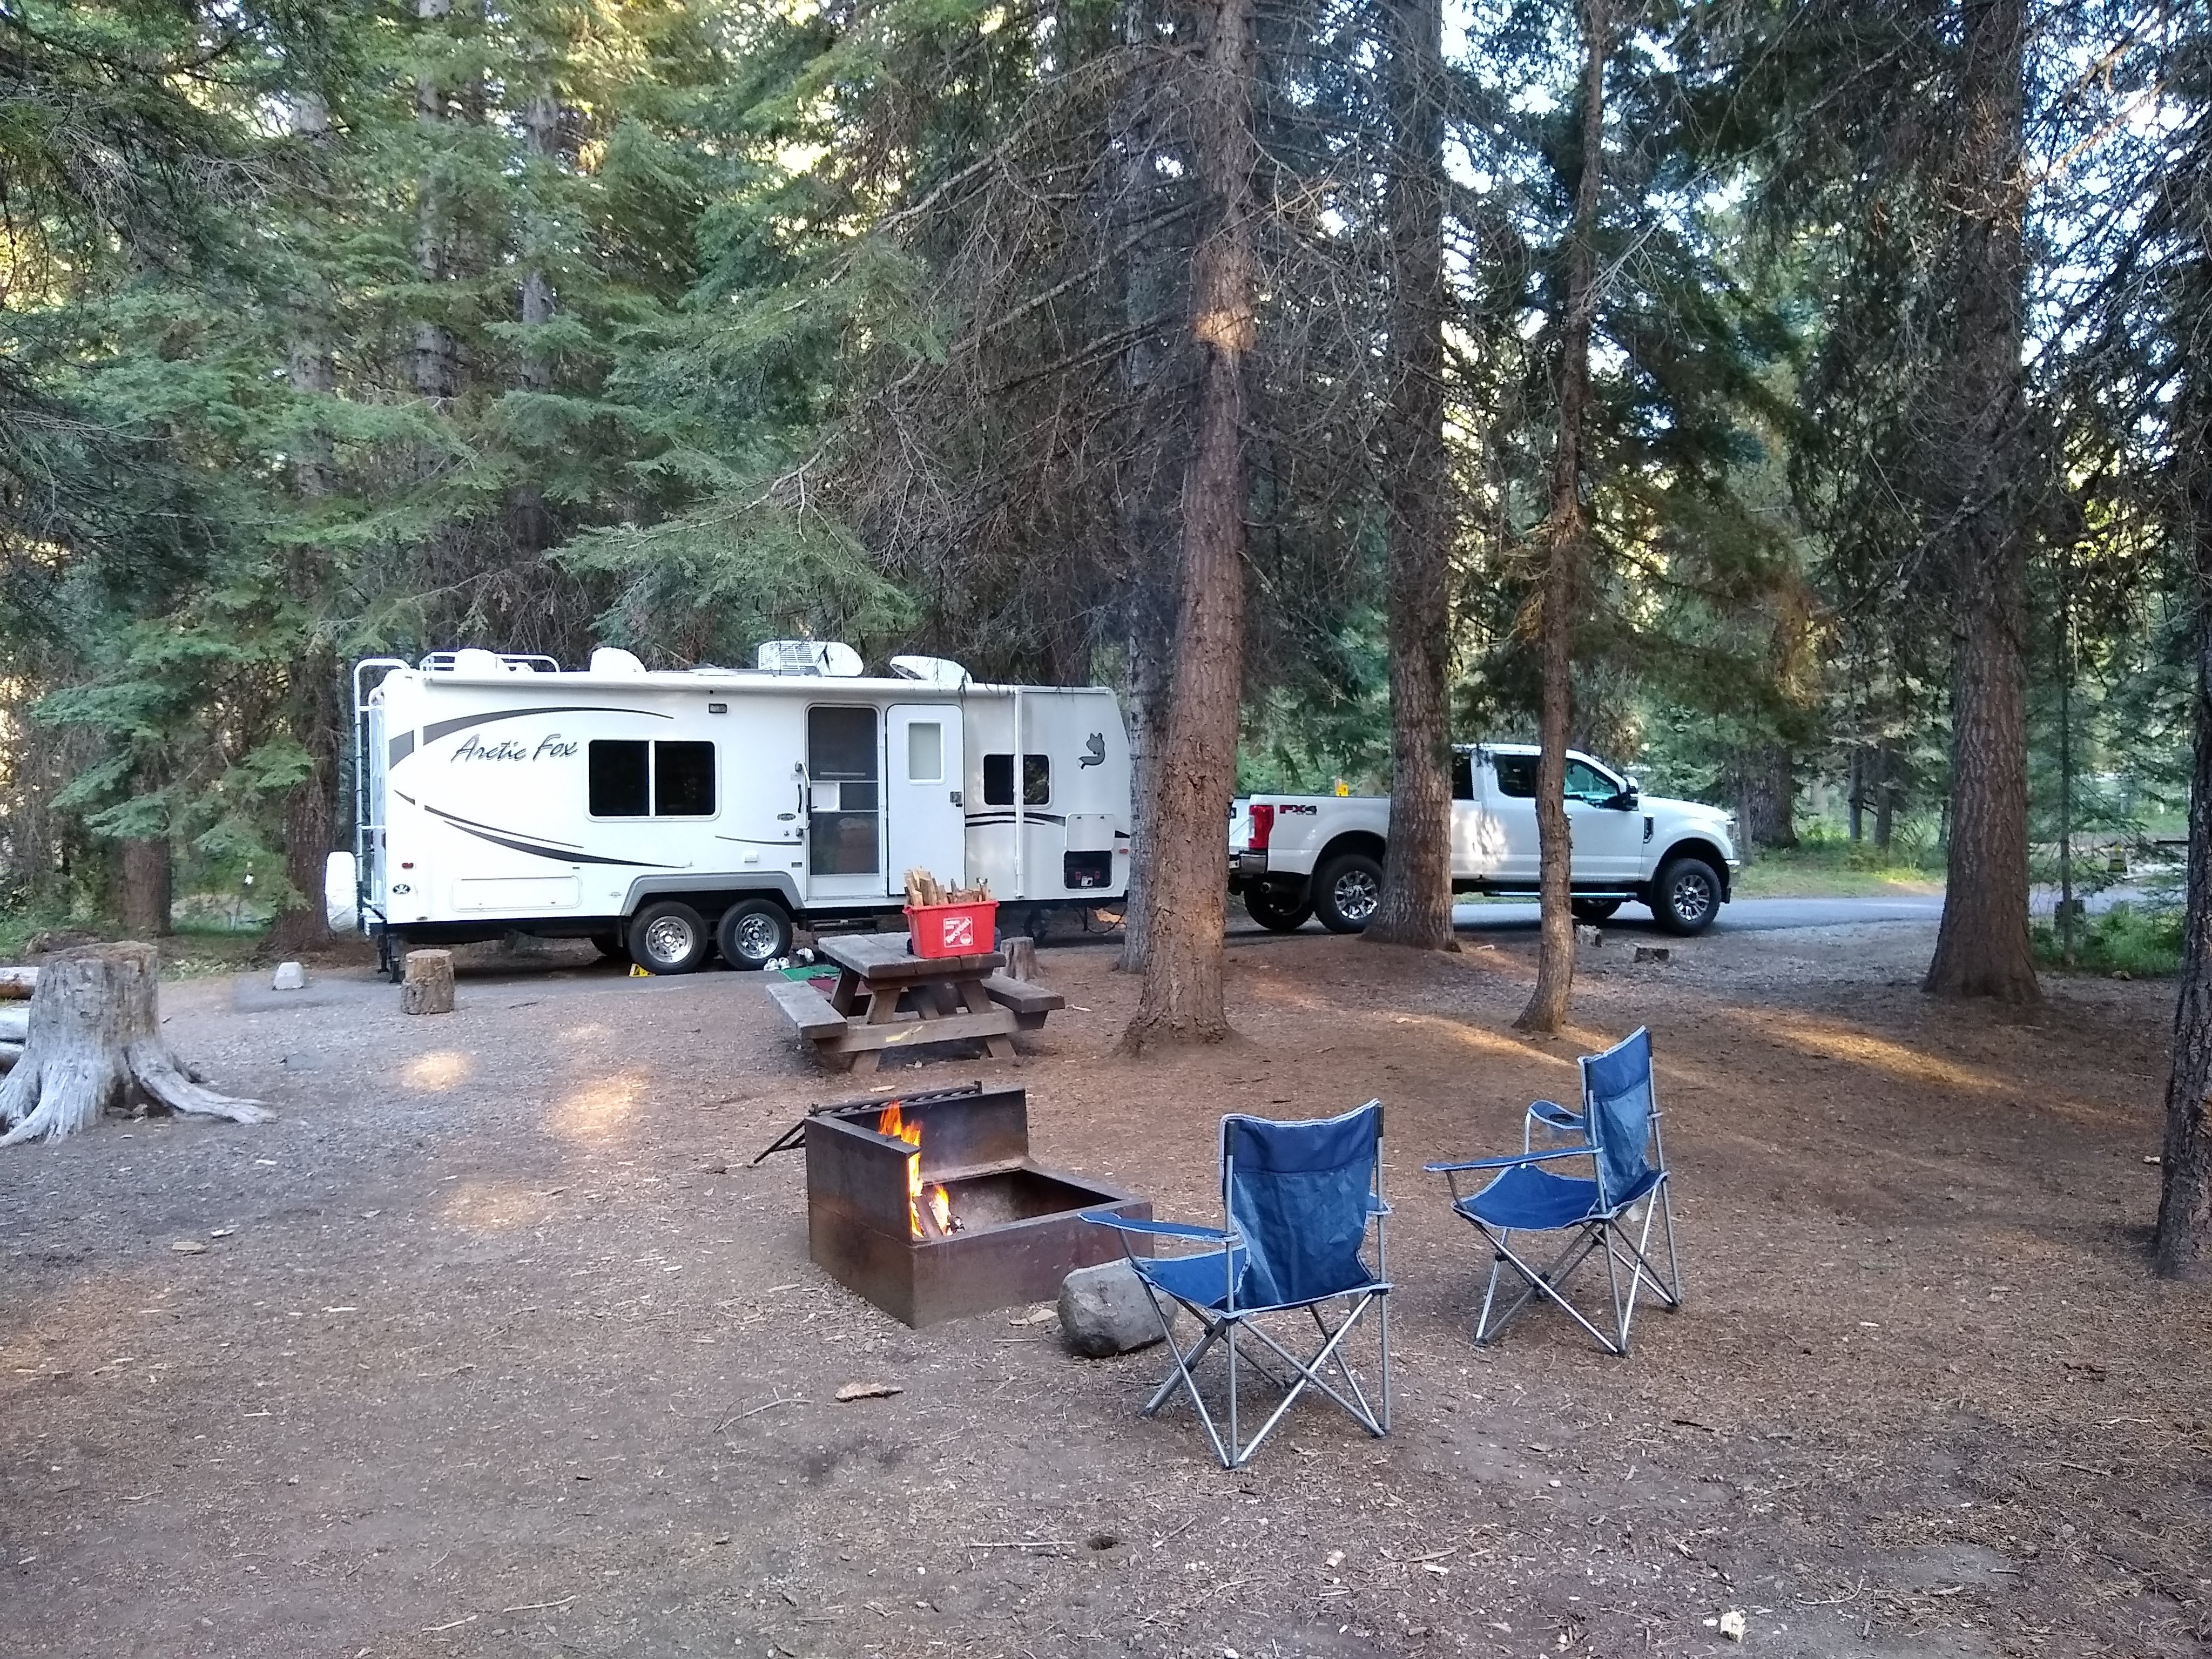 Our spacious campsite A5